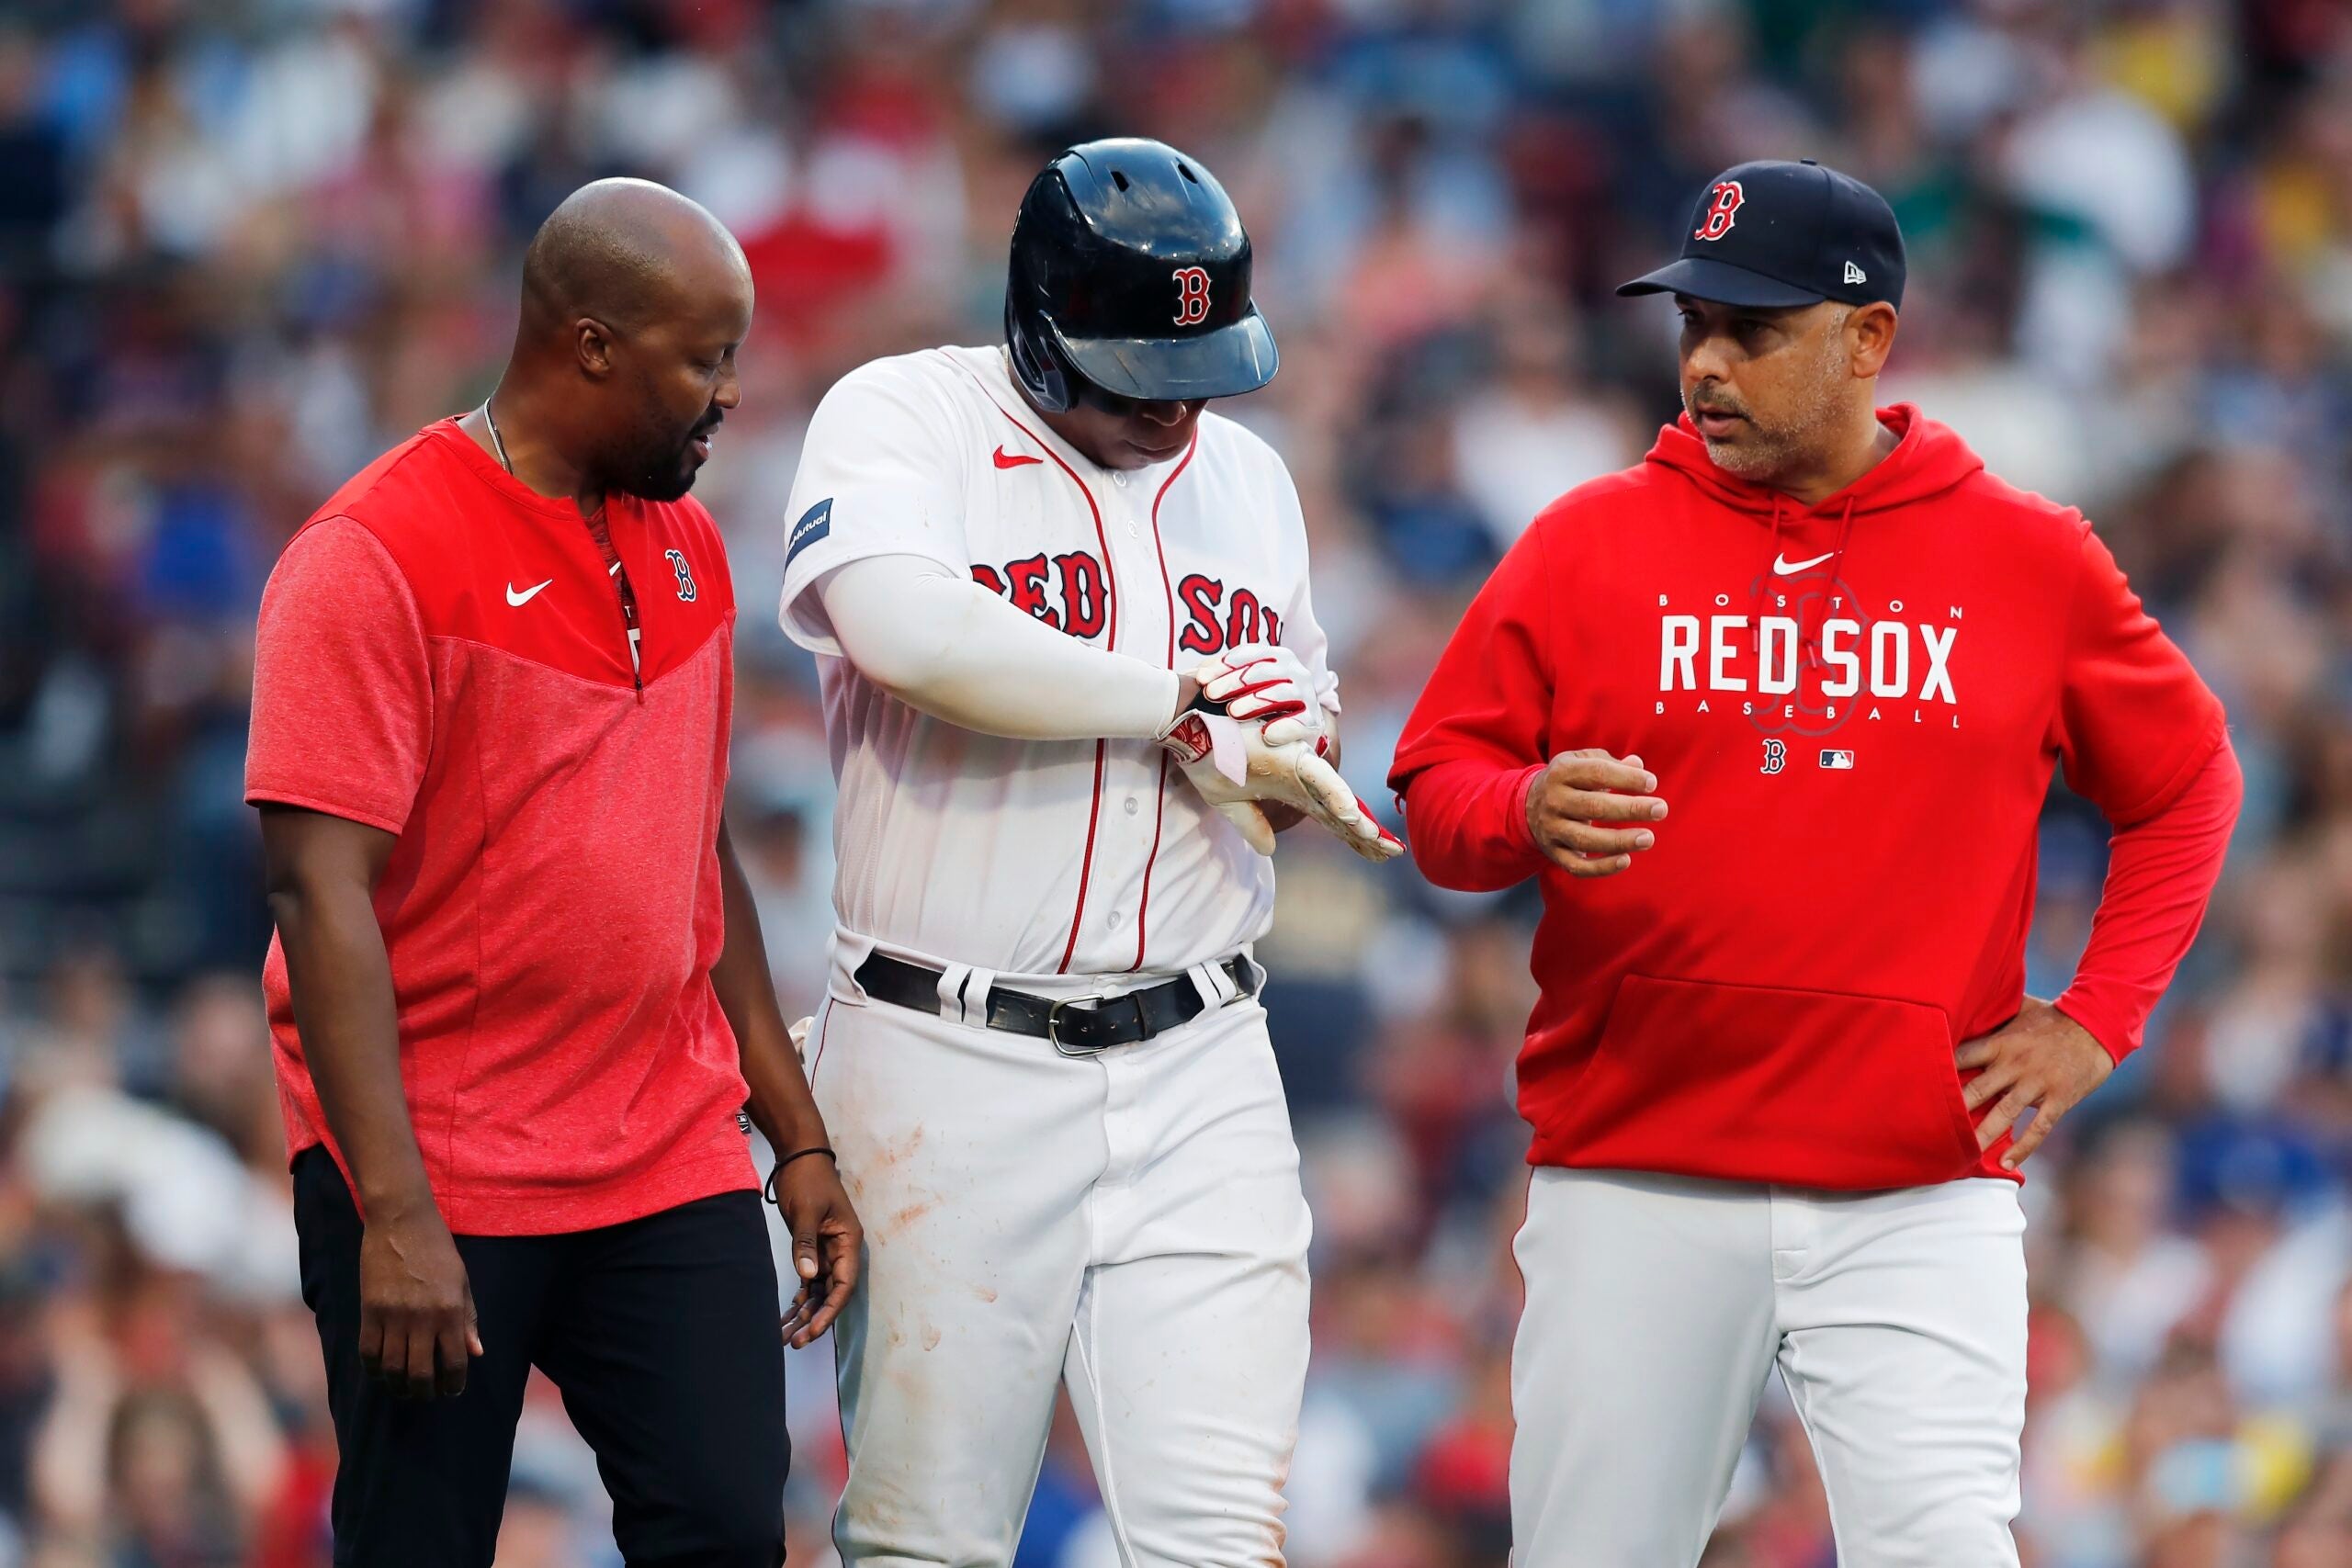 Red Sox get some good news on Rafael Devers' injured wrist